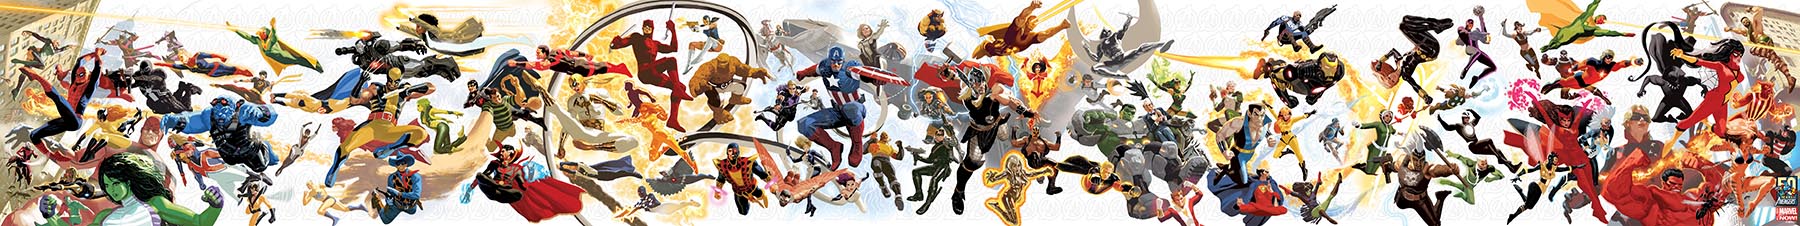 Avengers_50th_Anniversary_Poster